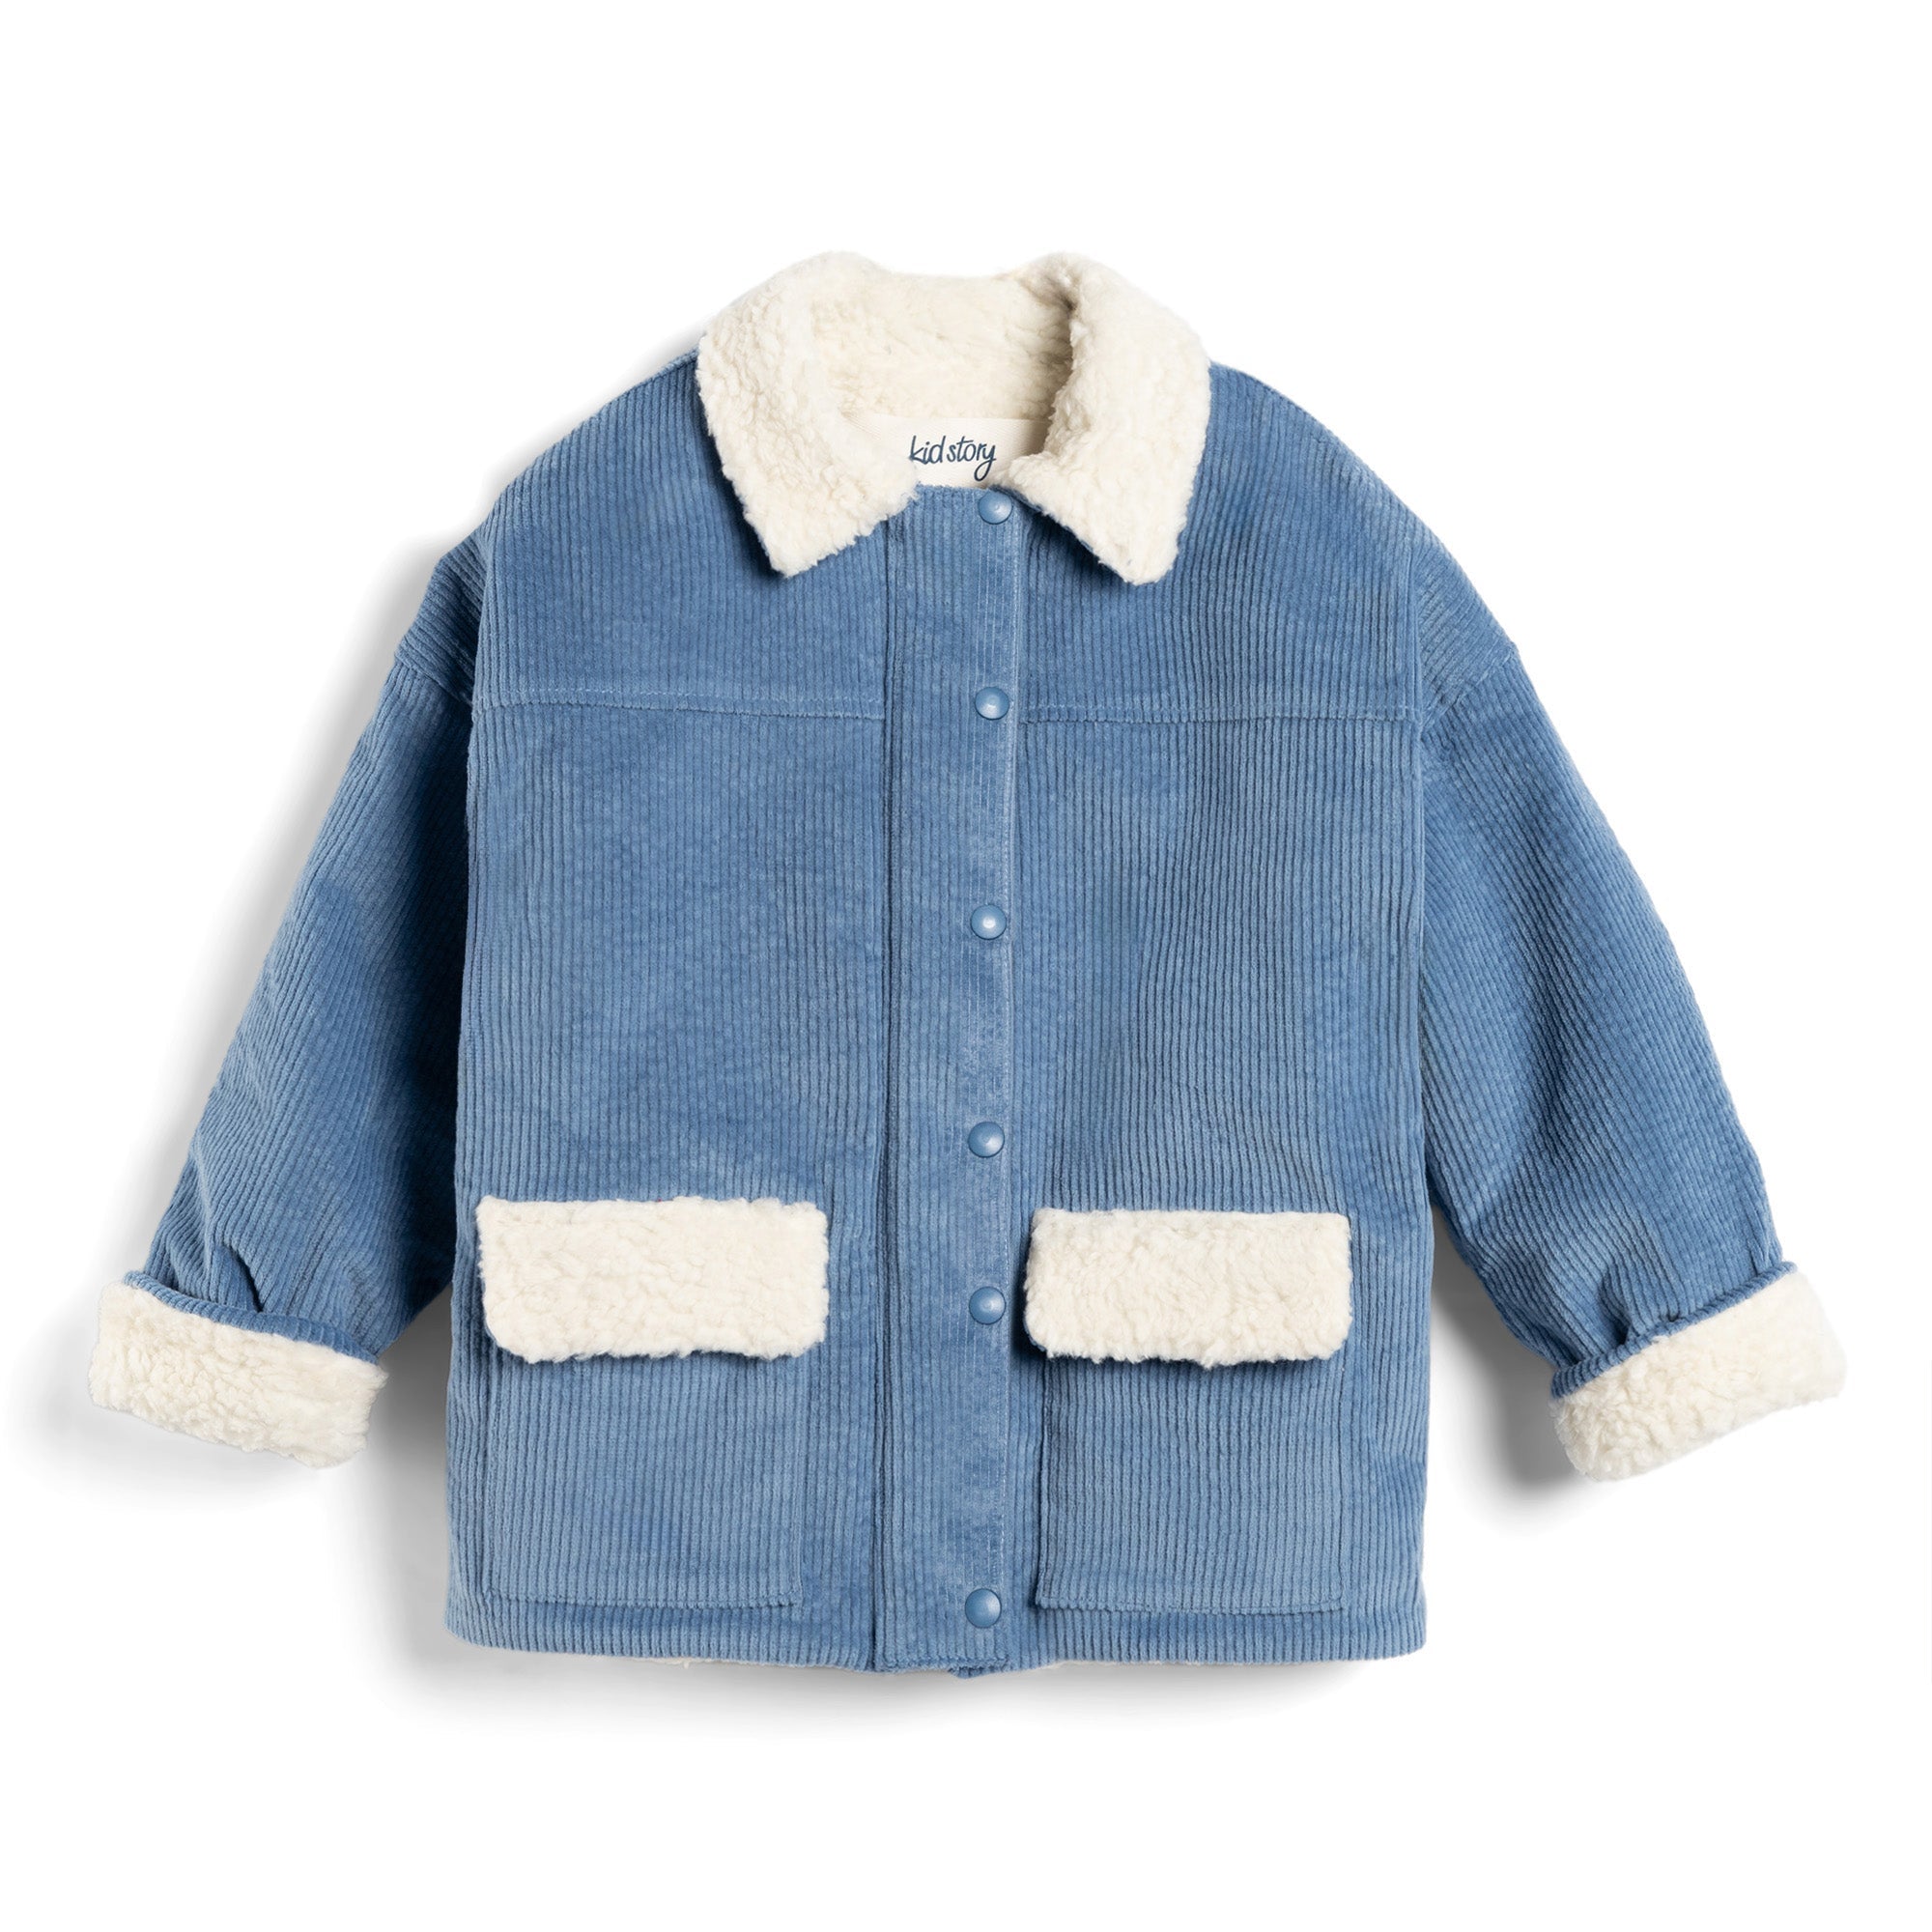 Historia de niños: chaqueta de pana de galleta azul de peluche